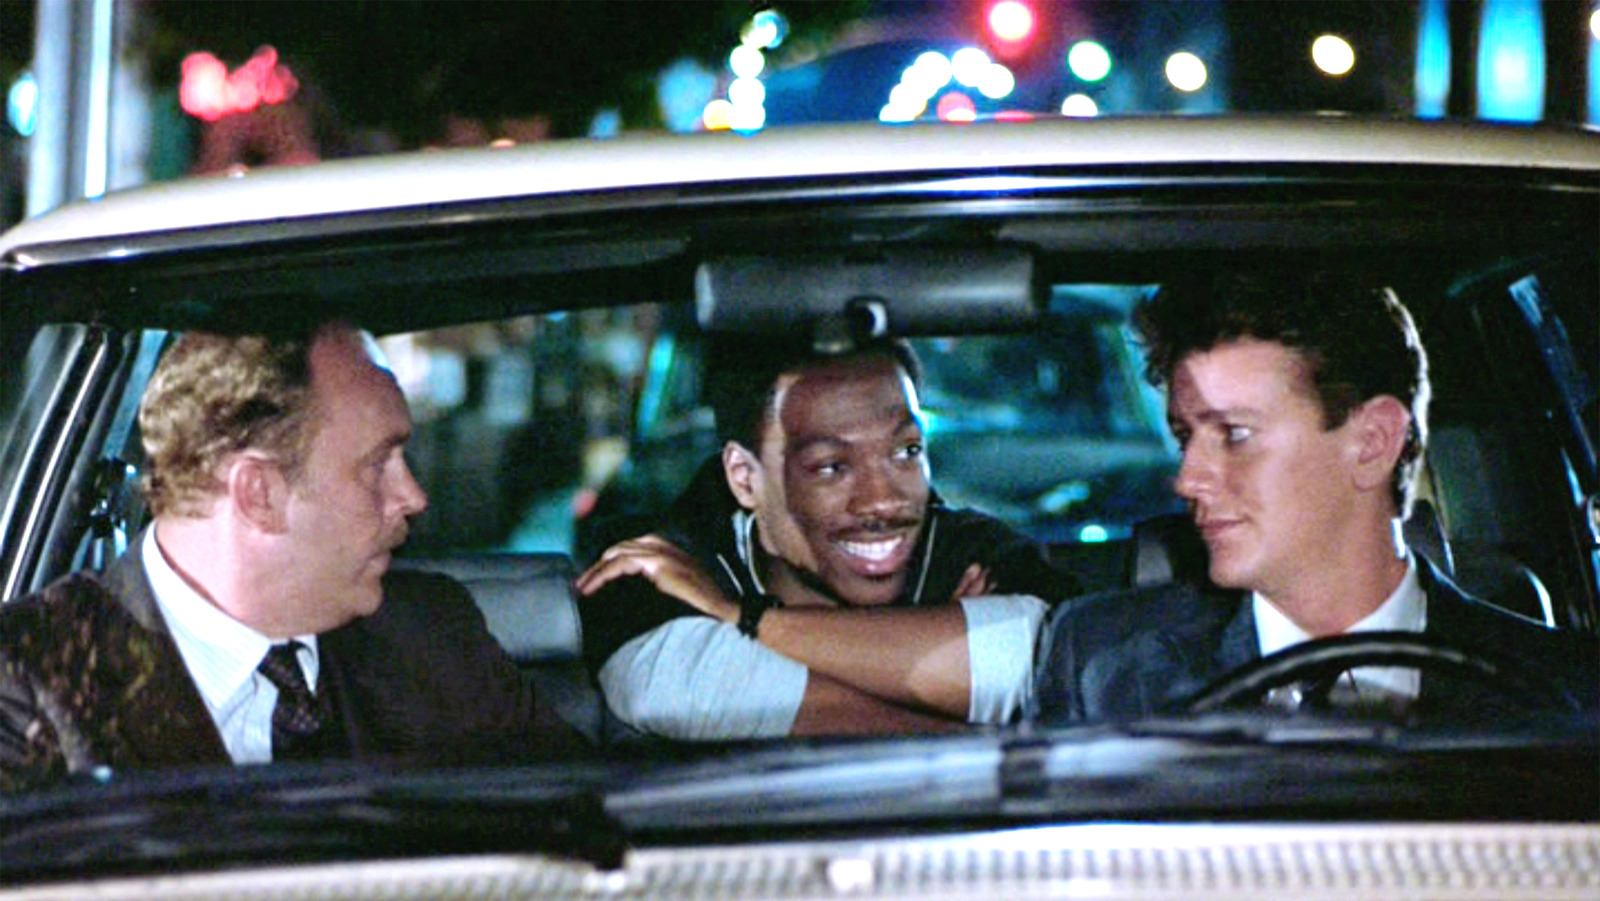 The Beverly Hills cop was Michael Eisner's response to a speeding ticket